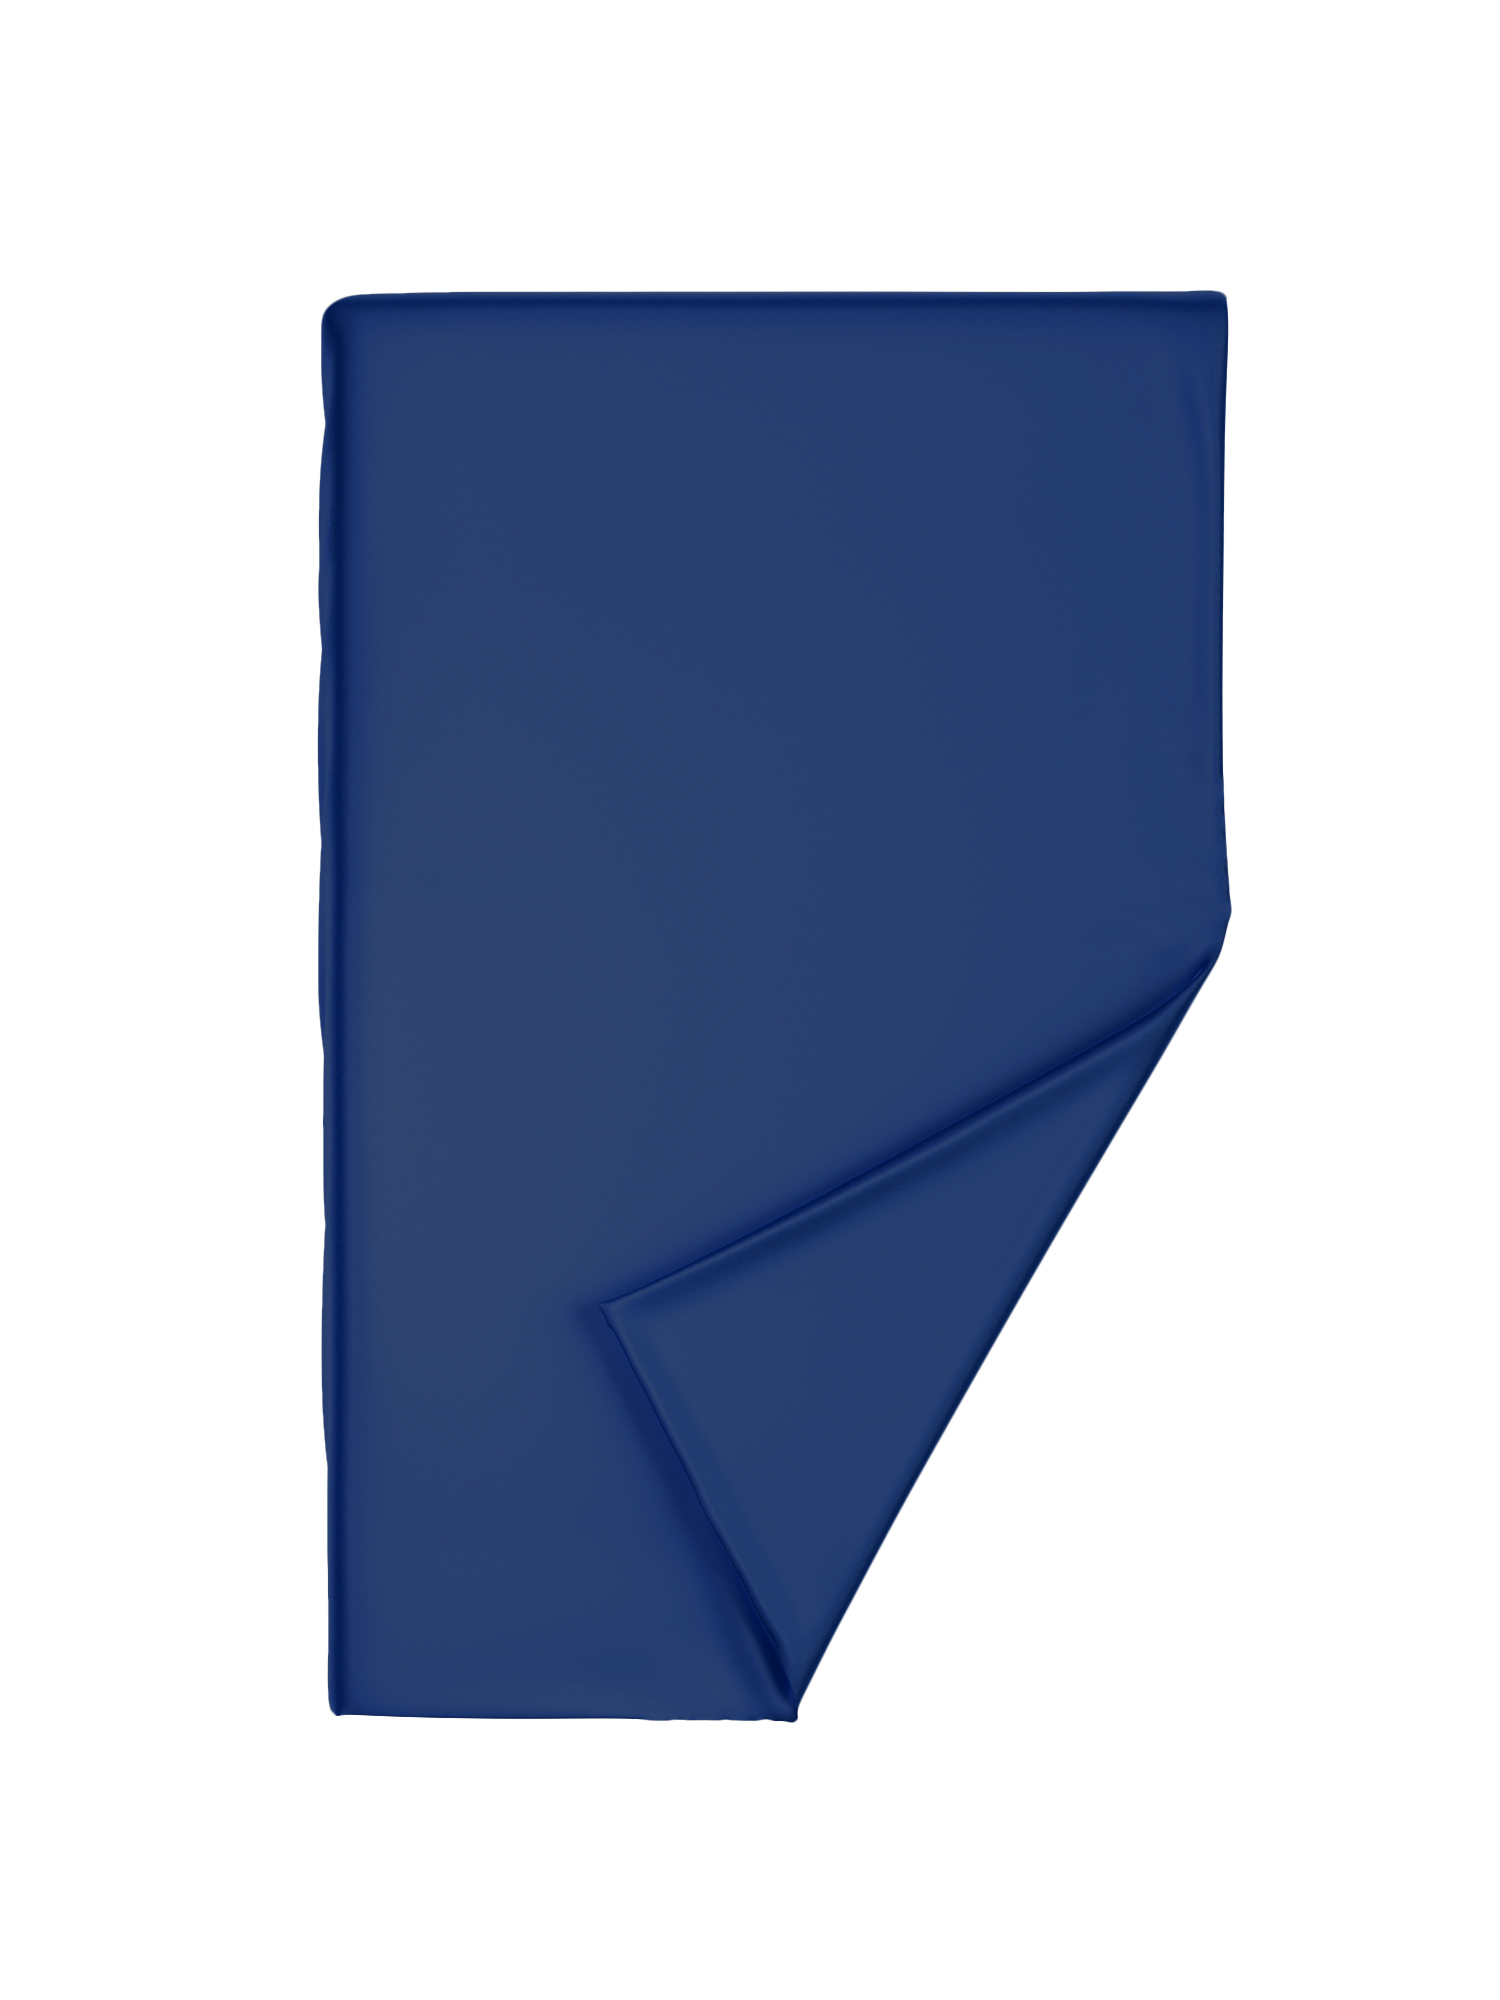 Topper Sheet-Case Royal Cotton Sateen Dark Blue H-151